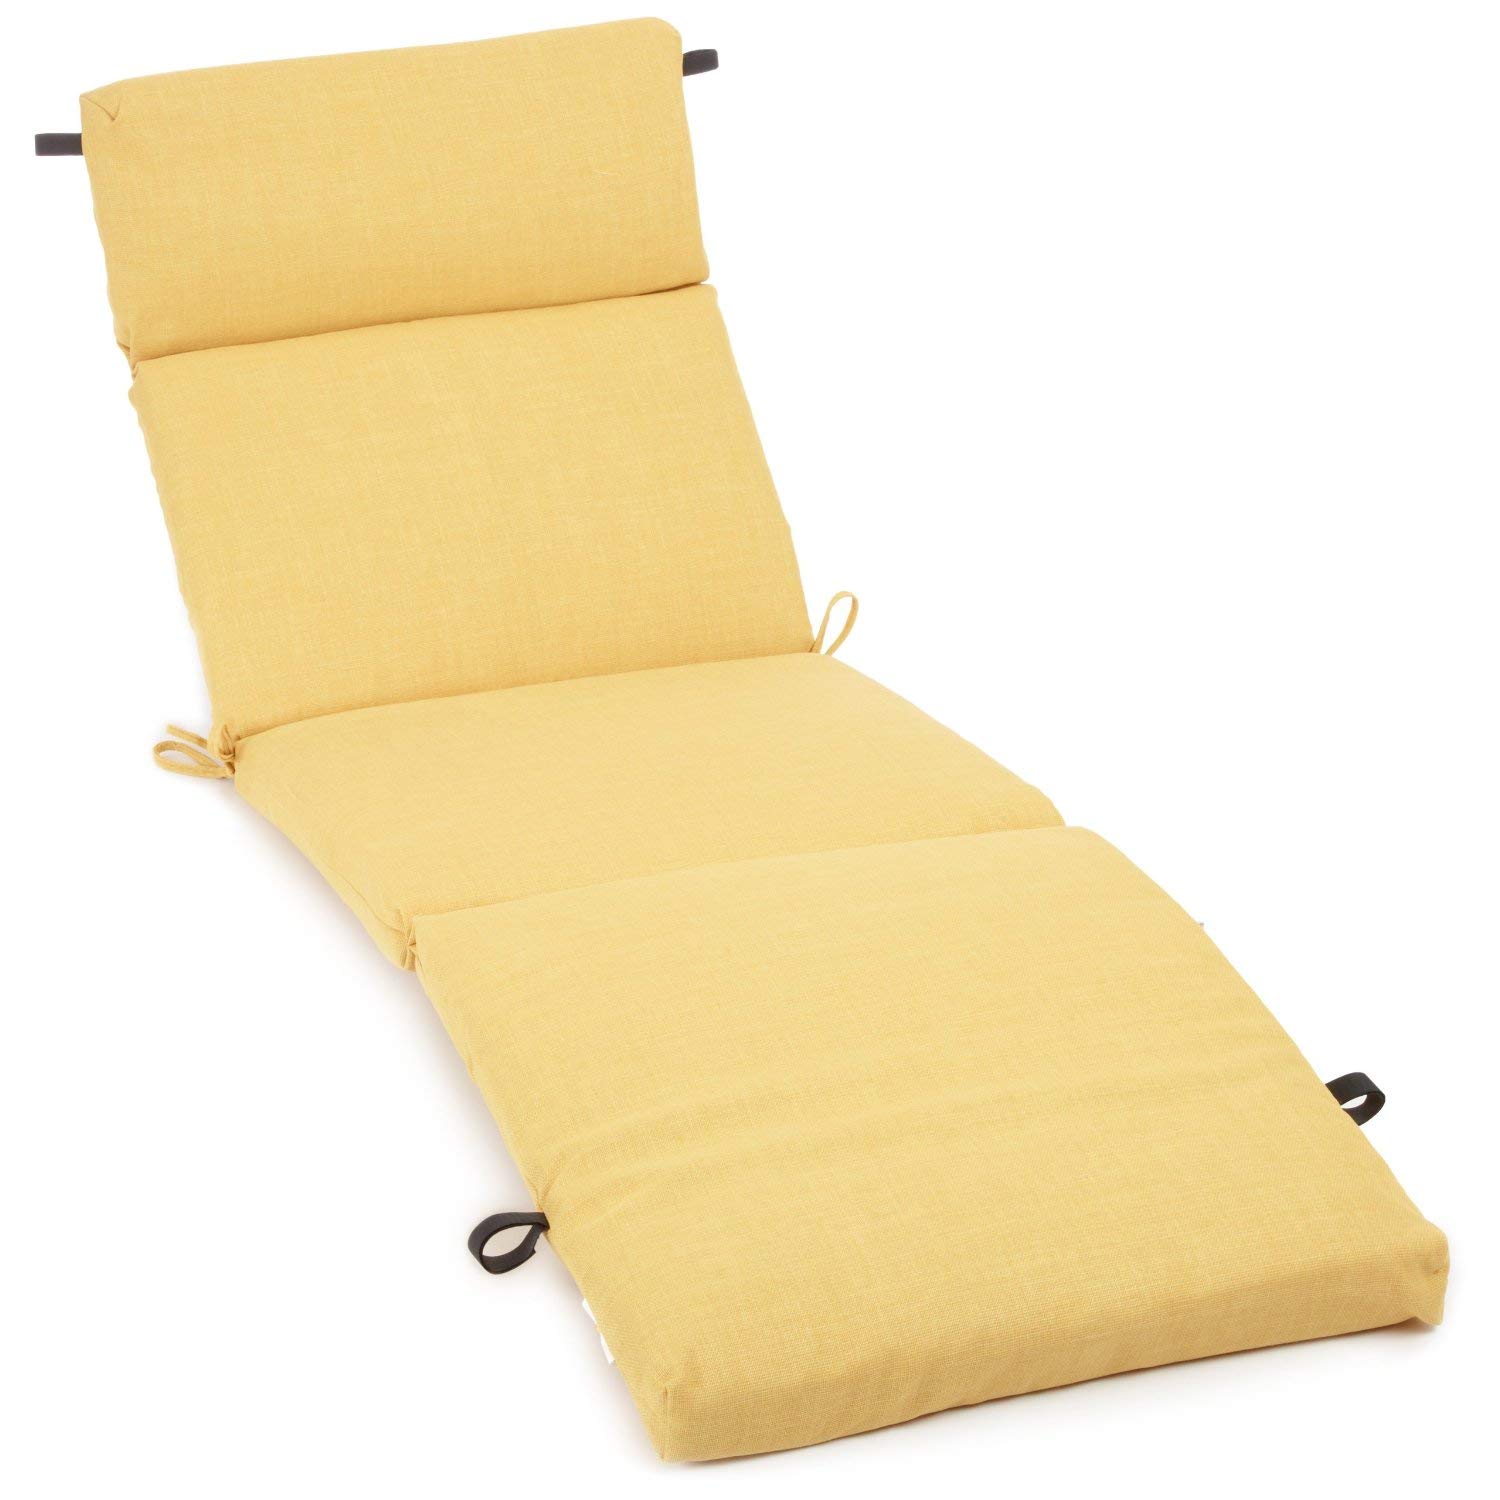 Blazing Needles 72-inch Outdoor Chasie Lounge Cushion - Lemon